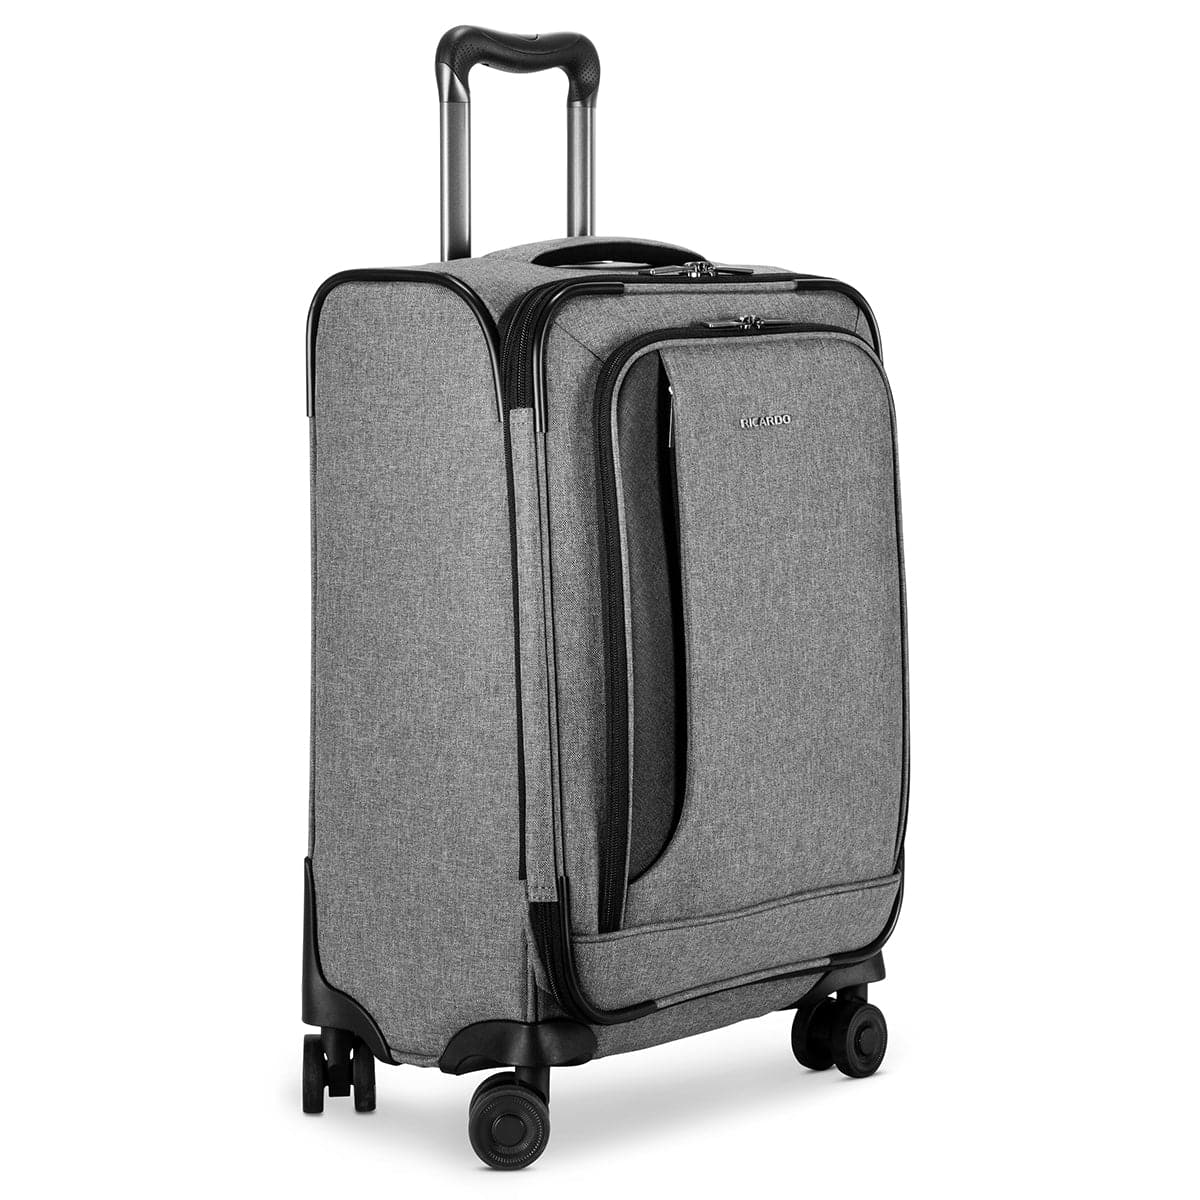 Ricardo Beverly Hills Malibu Bay 3.0 Carry-On Luggage